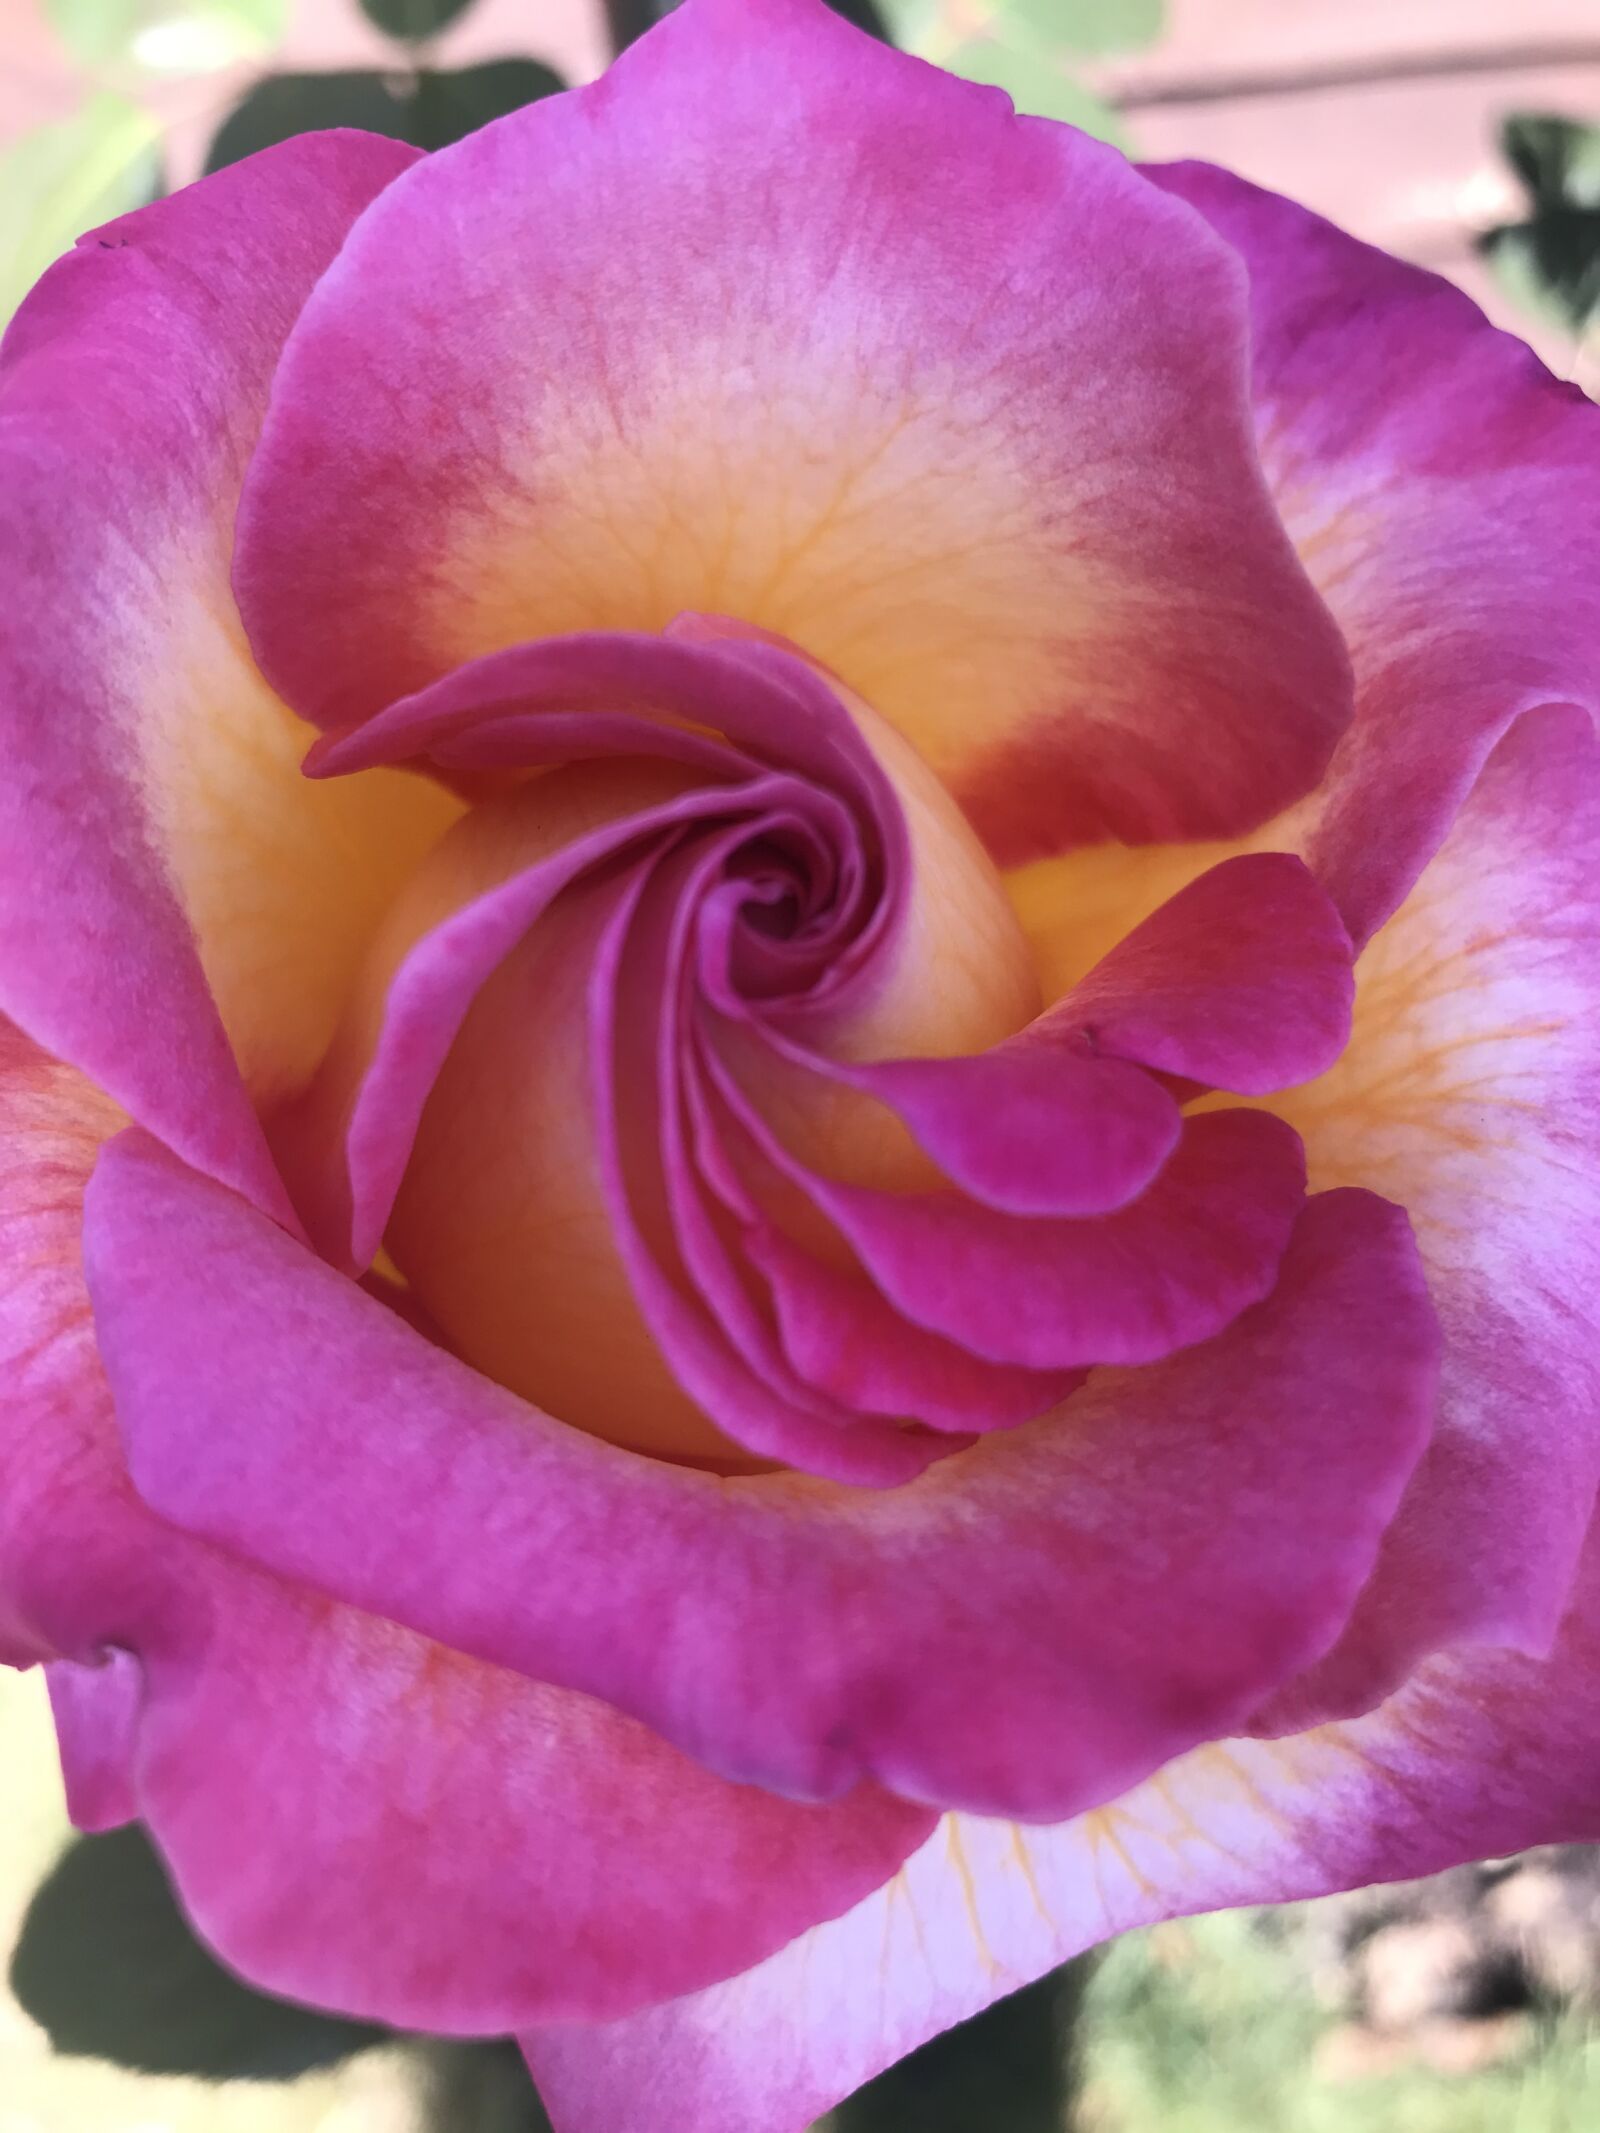 iPhone 7 Plus back dual camera 3.99mm f/1.8 sample photo. Rose, swirl, flower photography